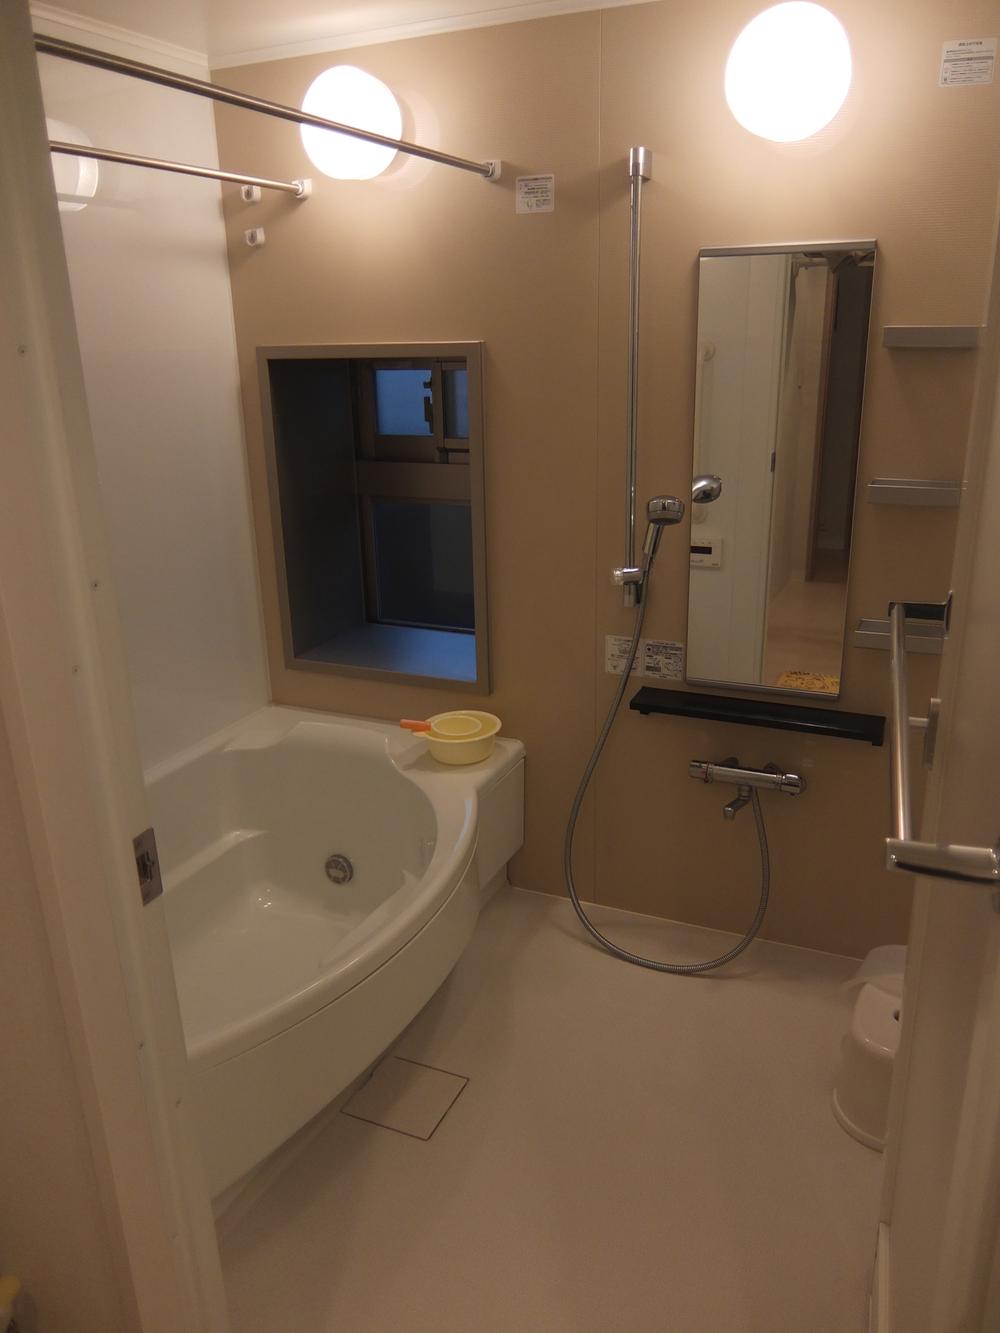 Bathroom. Bathroom of 1620 size with a convenient window to ventilation (with bathroom dryer)